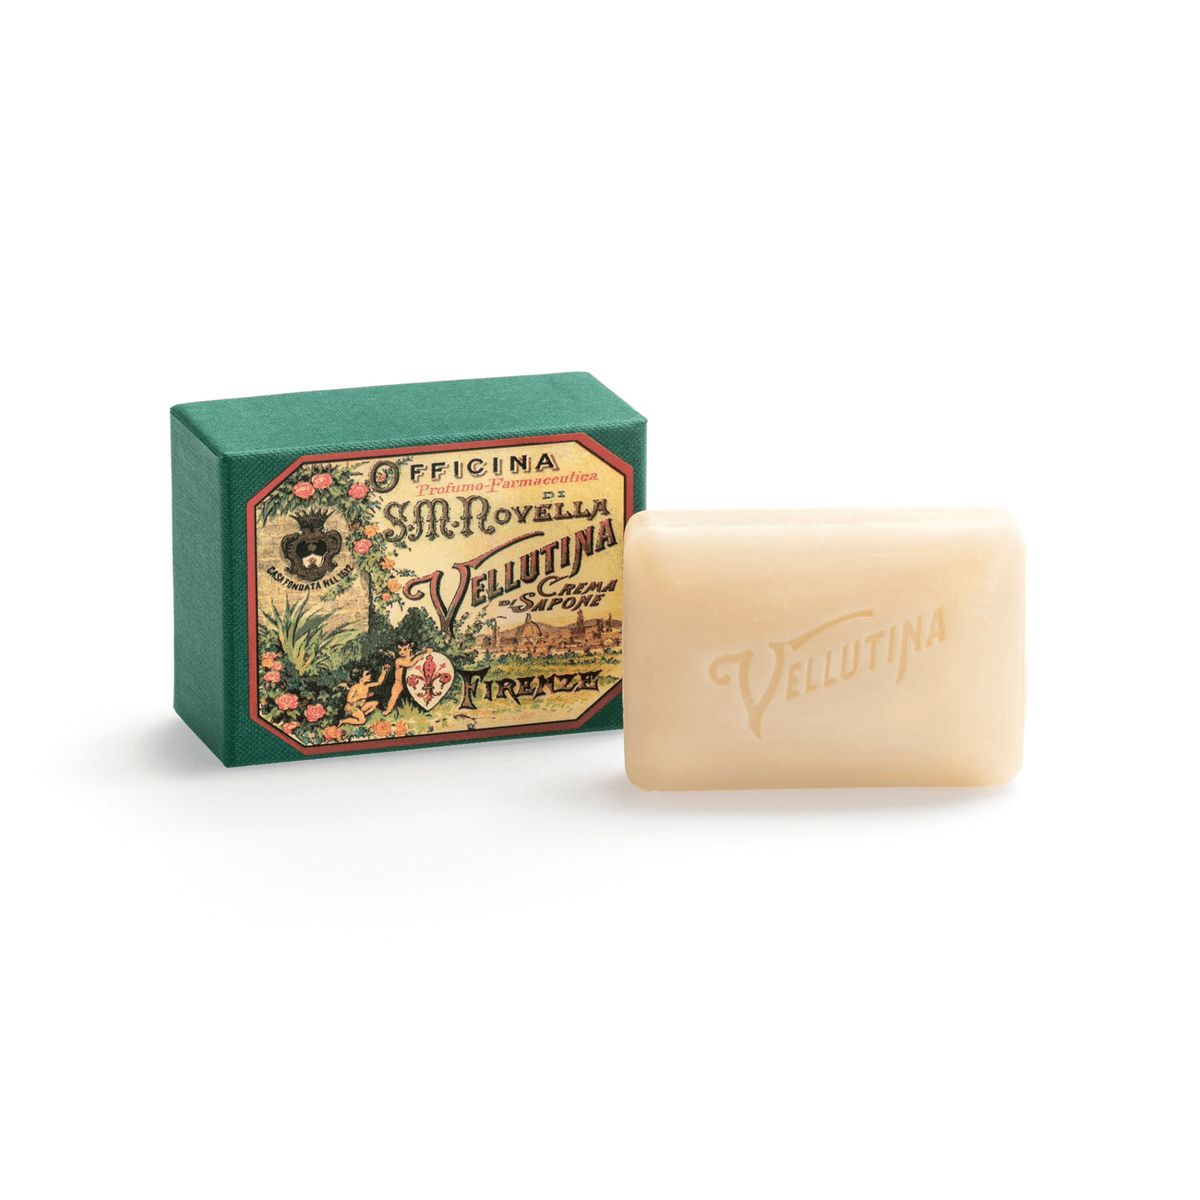 Primary Image of Vellutina Soap